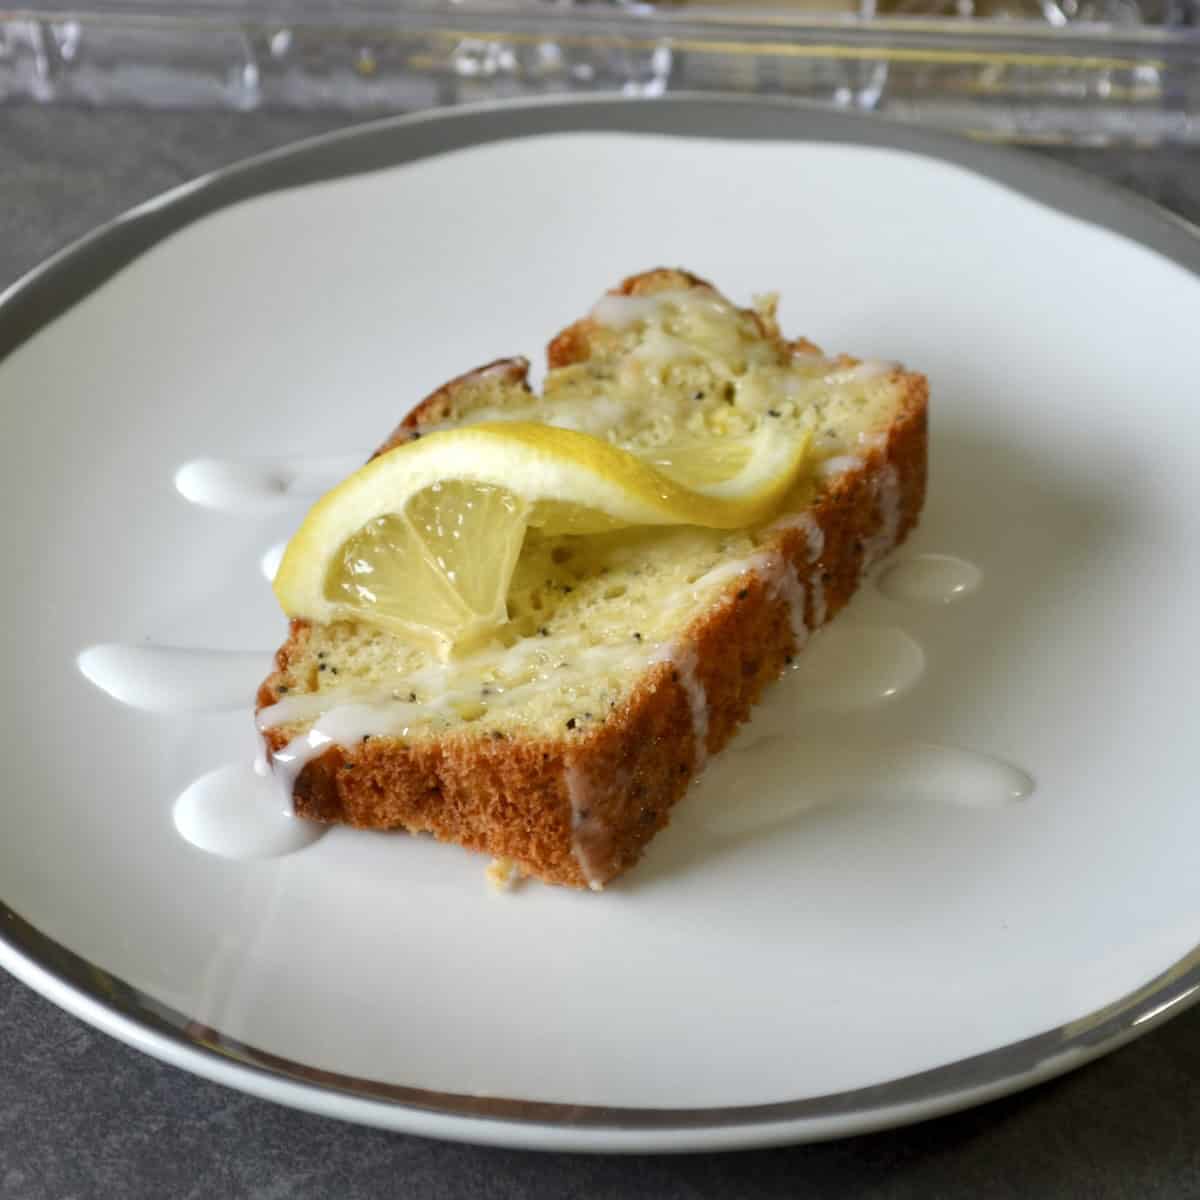 Slice of lemon bread with glaze and lemon slice